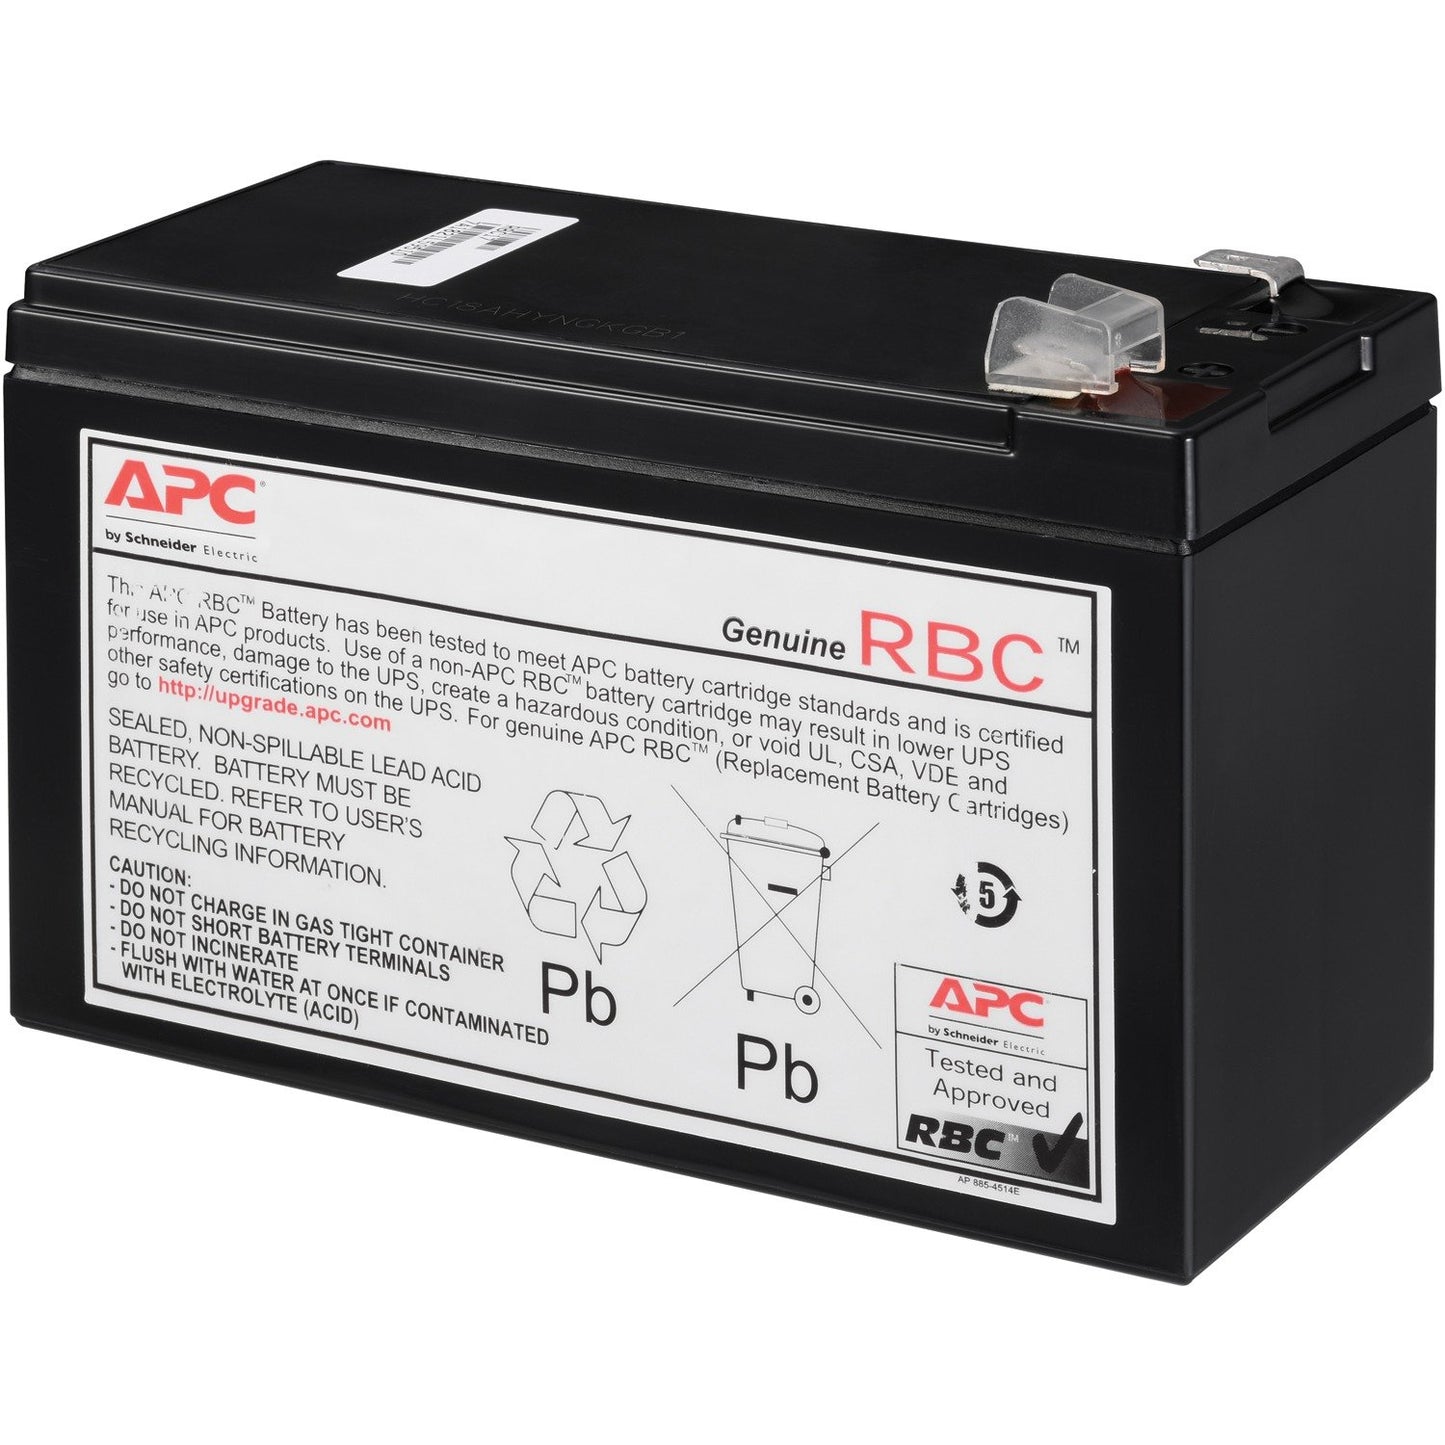 APC APCRBC17 Replacement Battery Cartridge #17